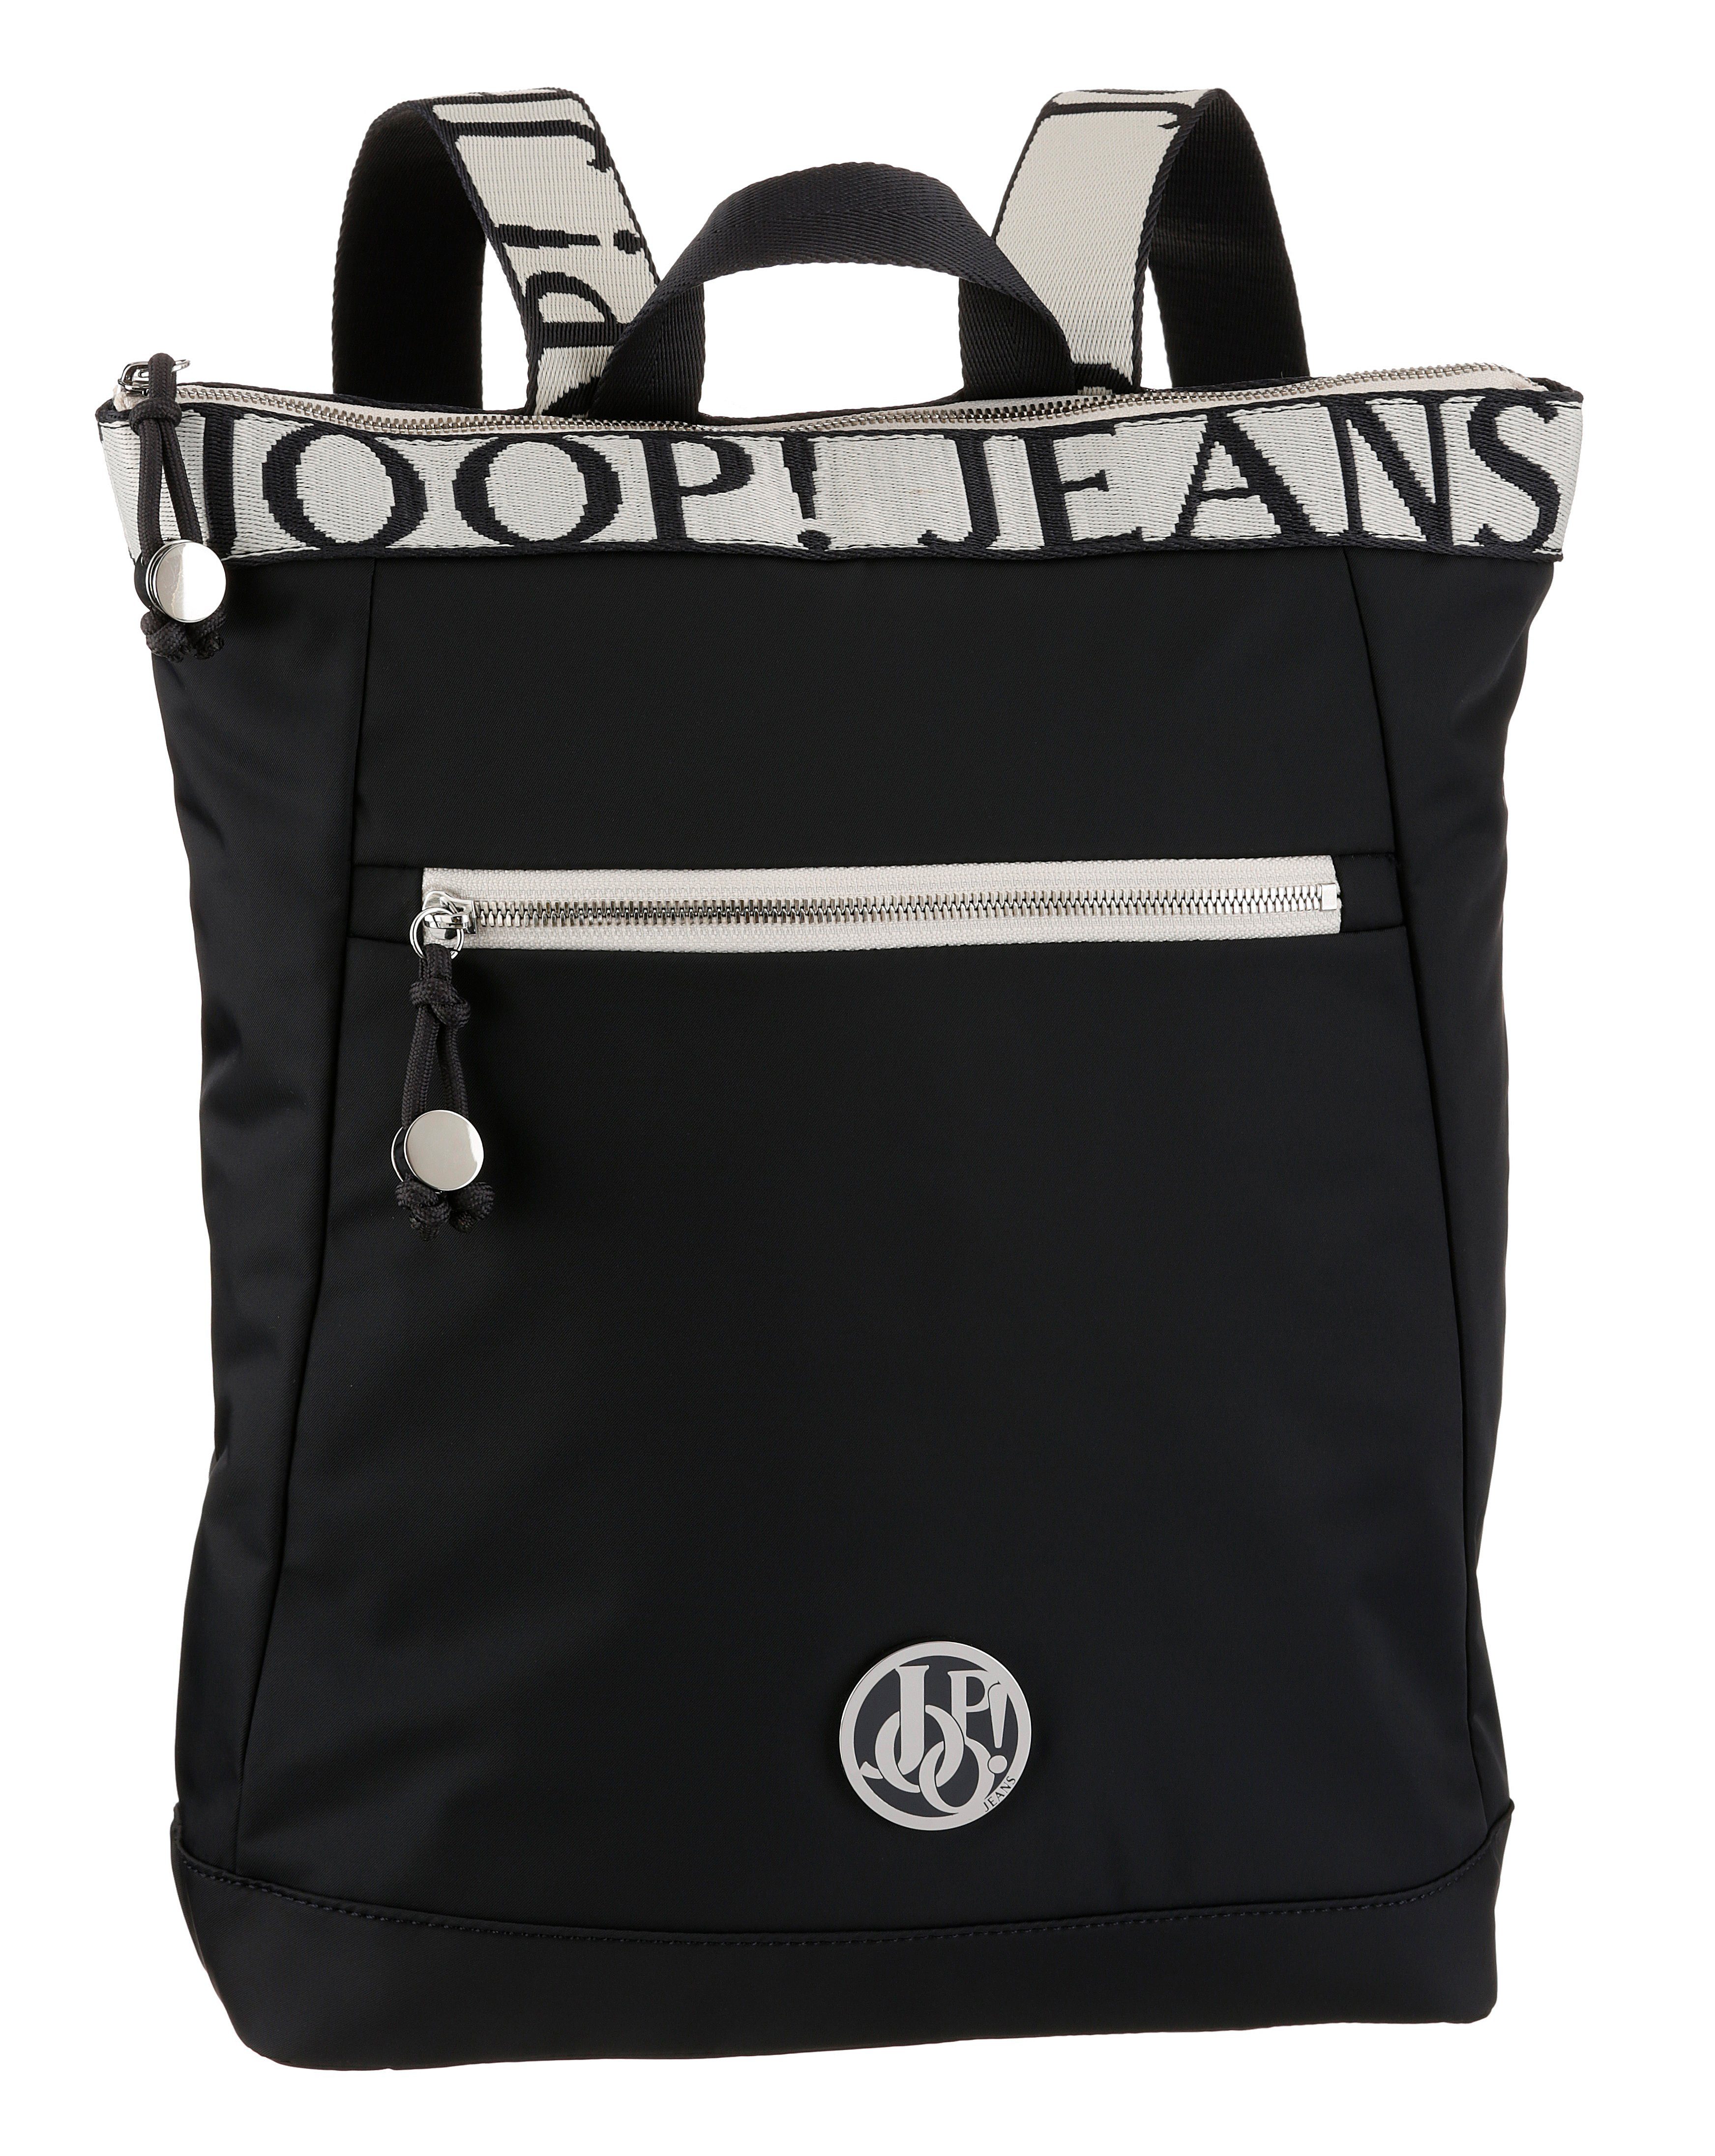 Joop Jeans Cityrucksack lietissimo elva backpack lvz, mit Logo Schriftzug auf den Trageriemen nightblue